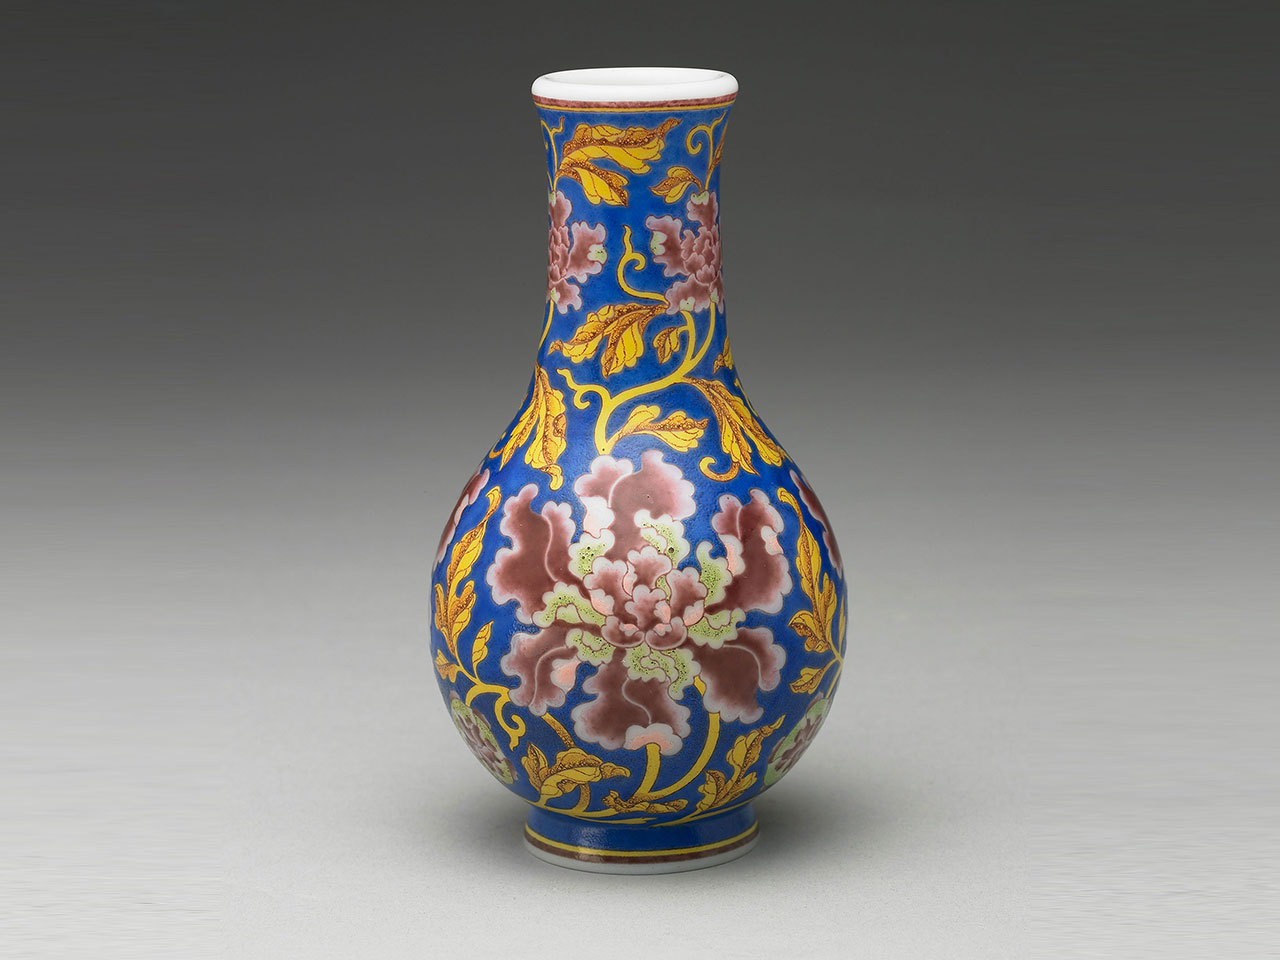 Glass gallbladder-shaped vase with peonies in painted enamels